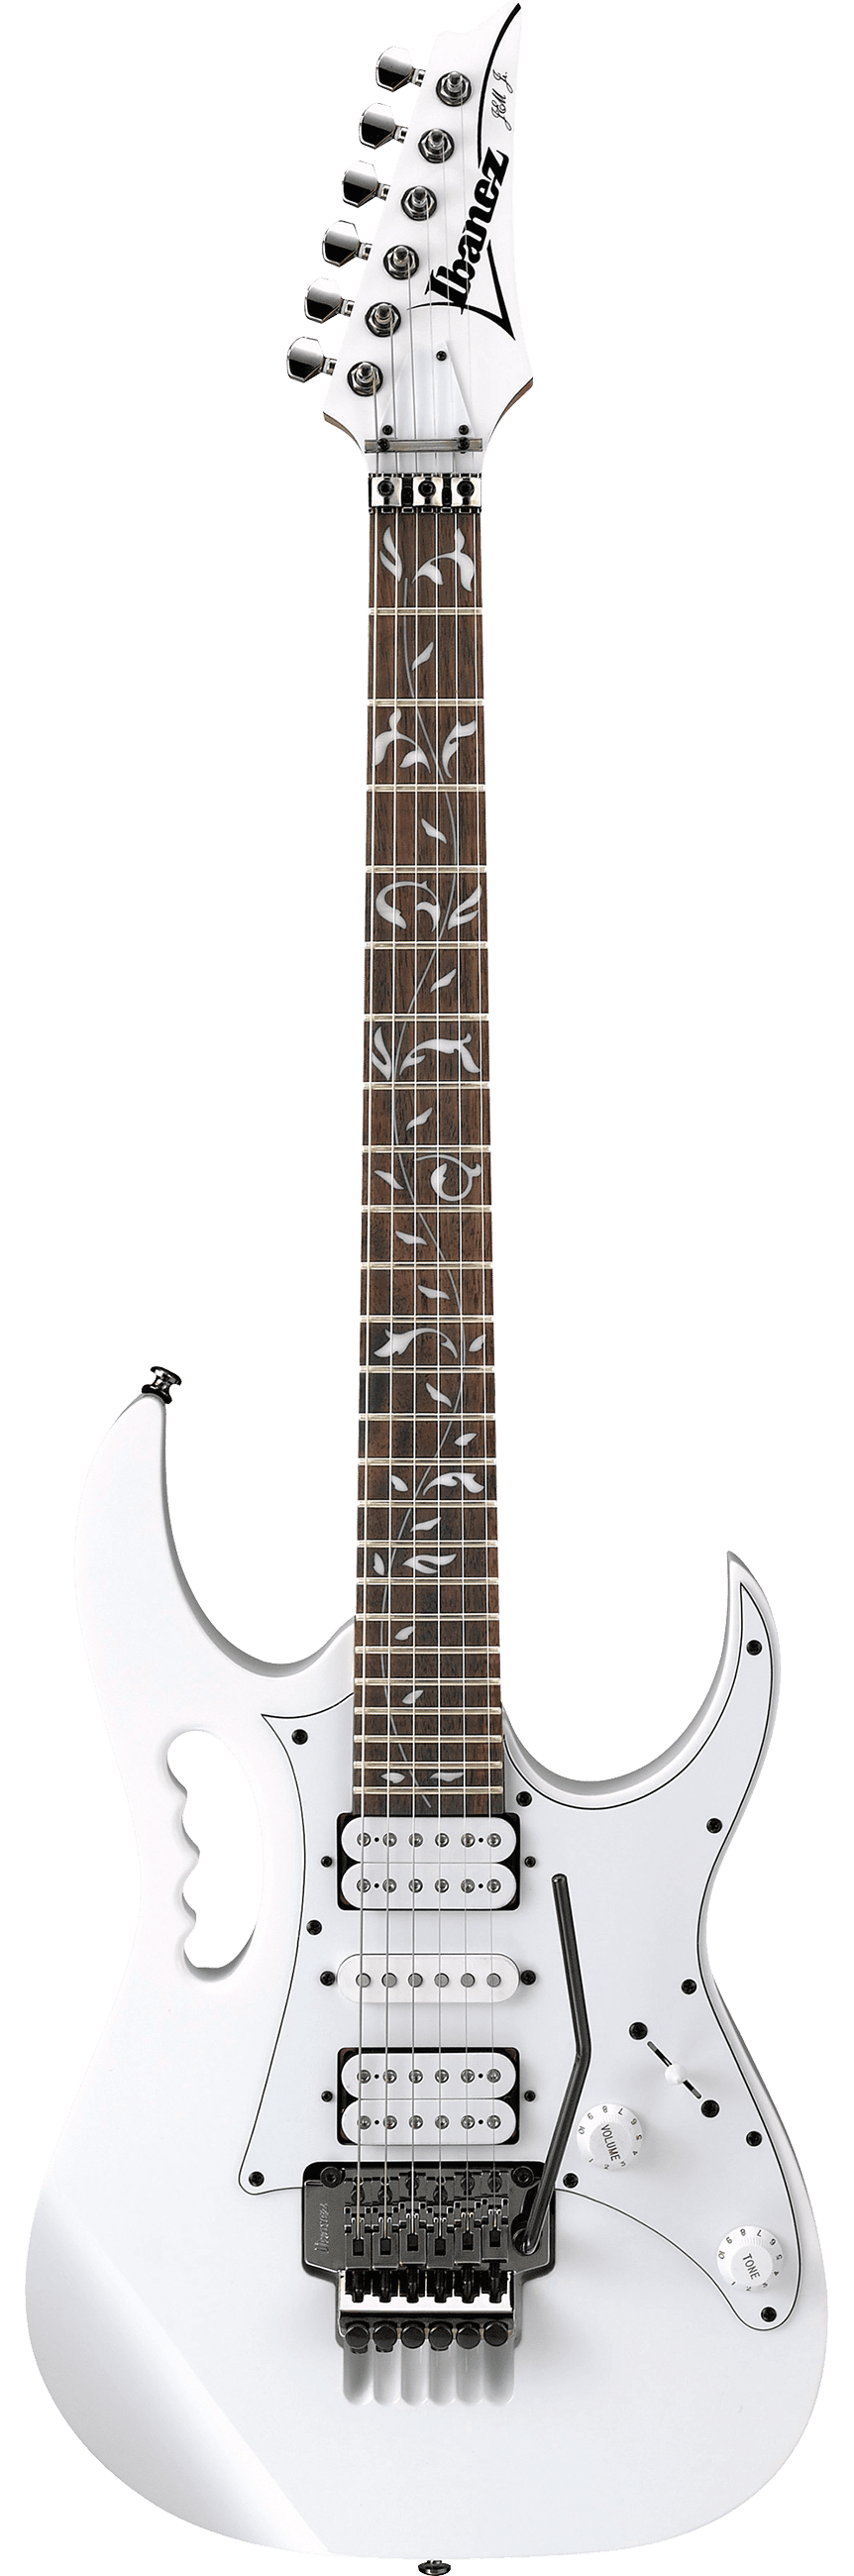 IBANEZ JEMJR (Steve Vai Signature) Electric Guitar (WH : White)